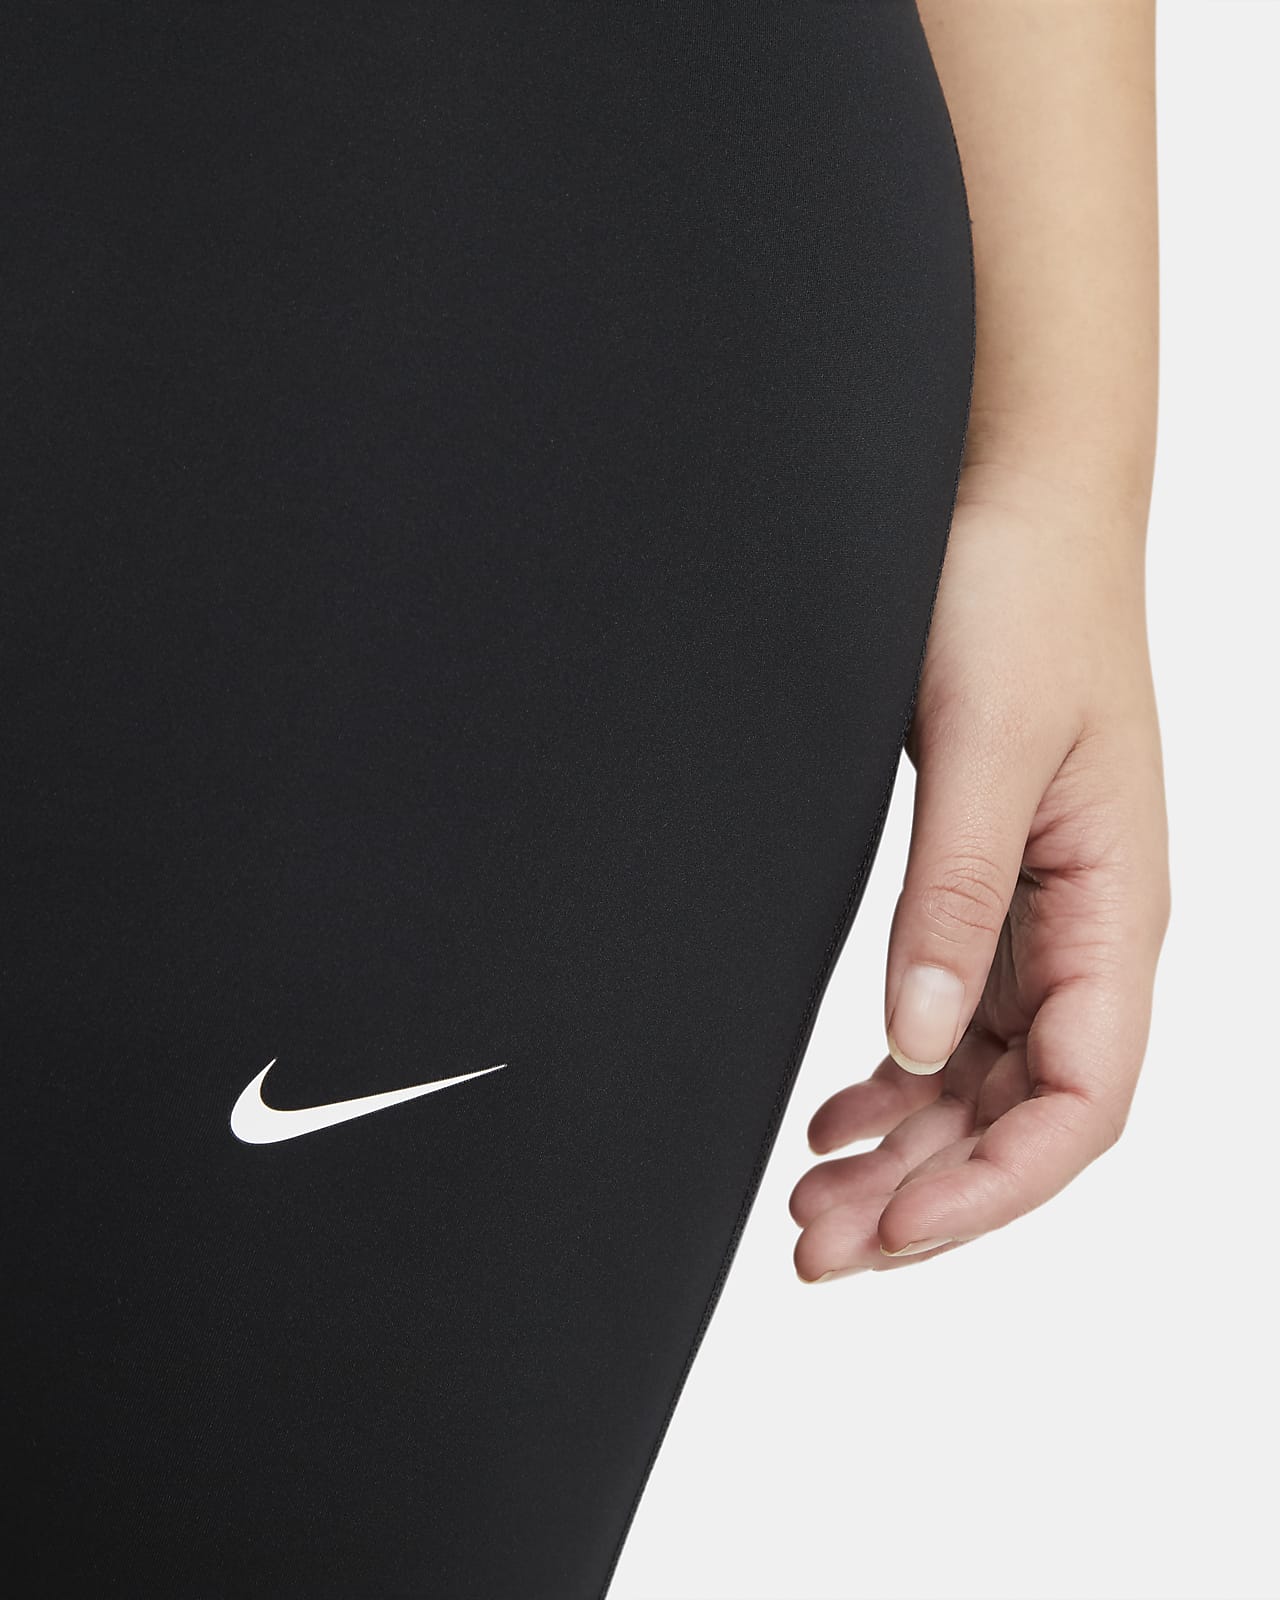 Nike Pro Women's Mid-Rise Tight Fit Crop Mesh Leggings Black RRP £44.99